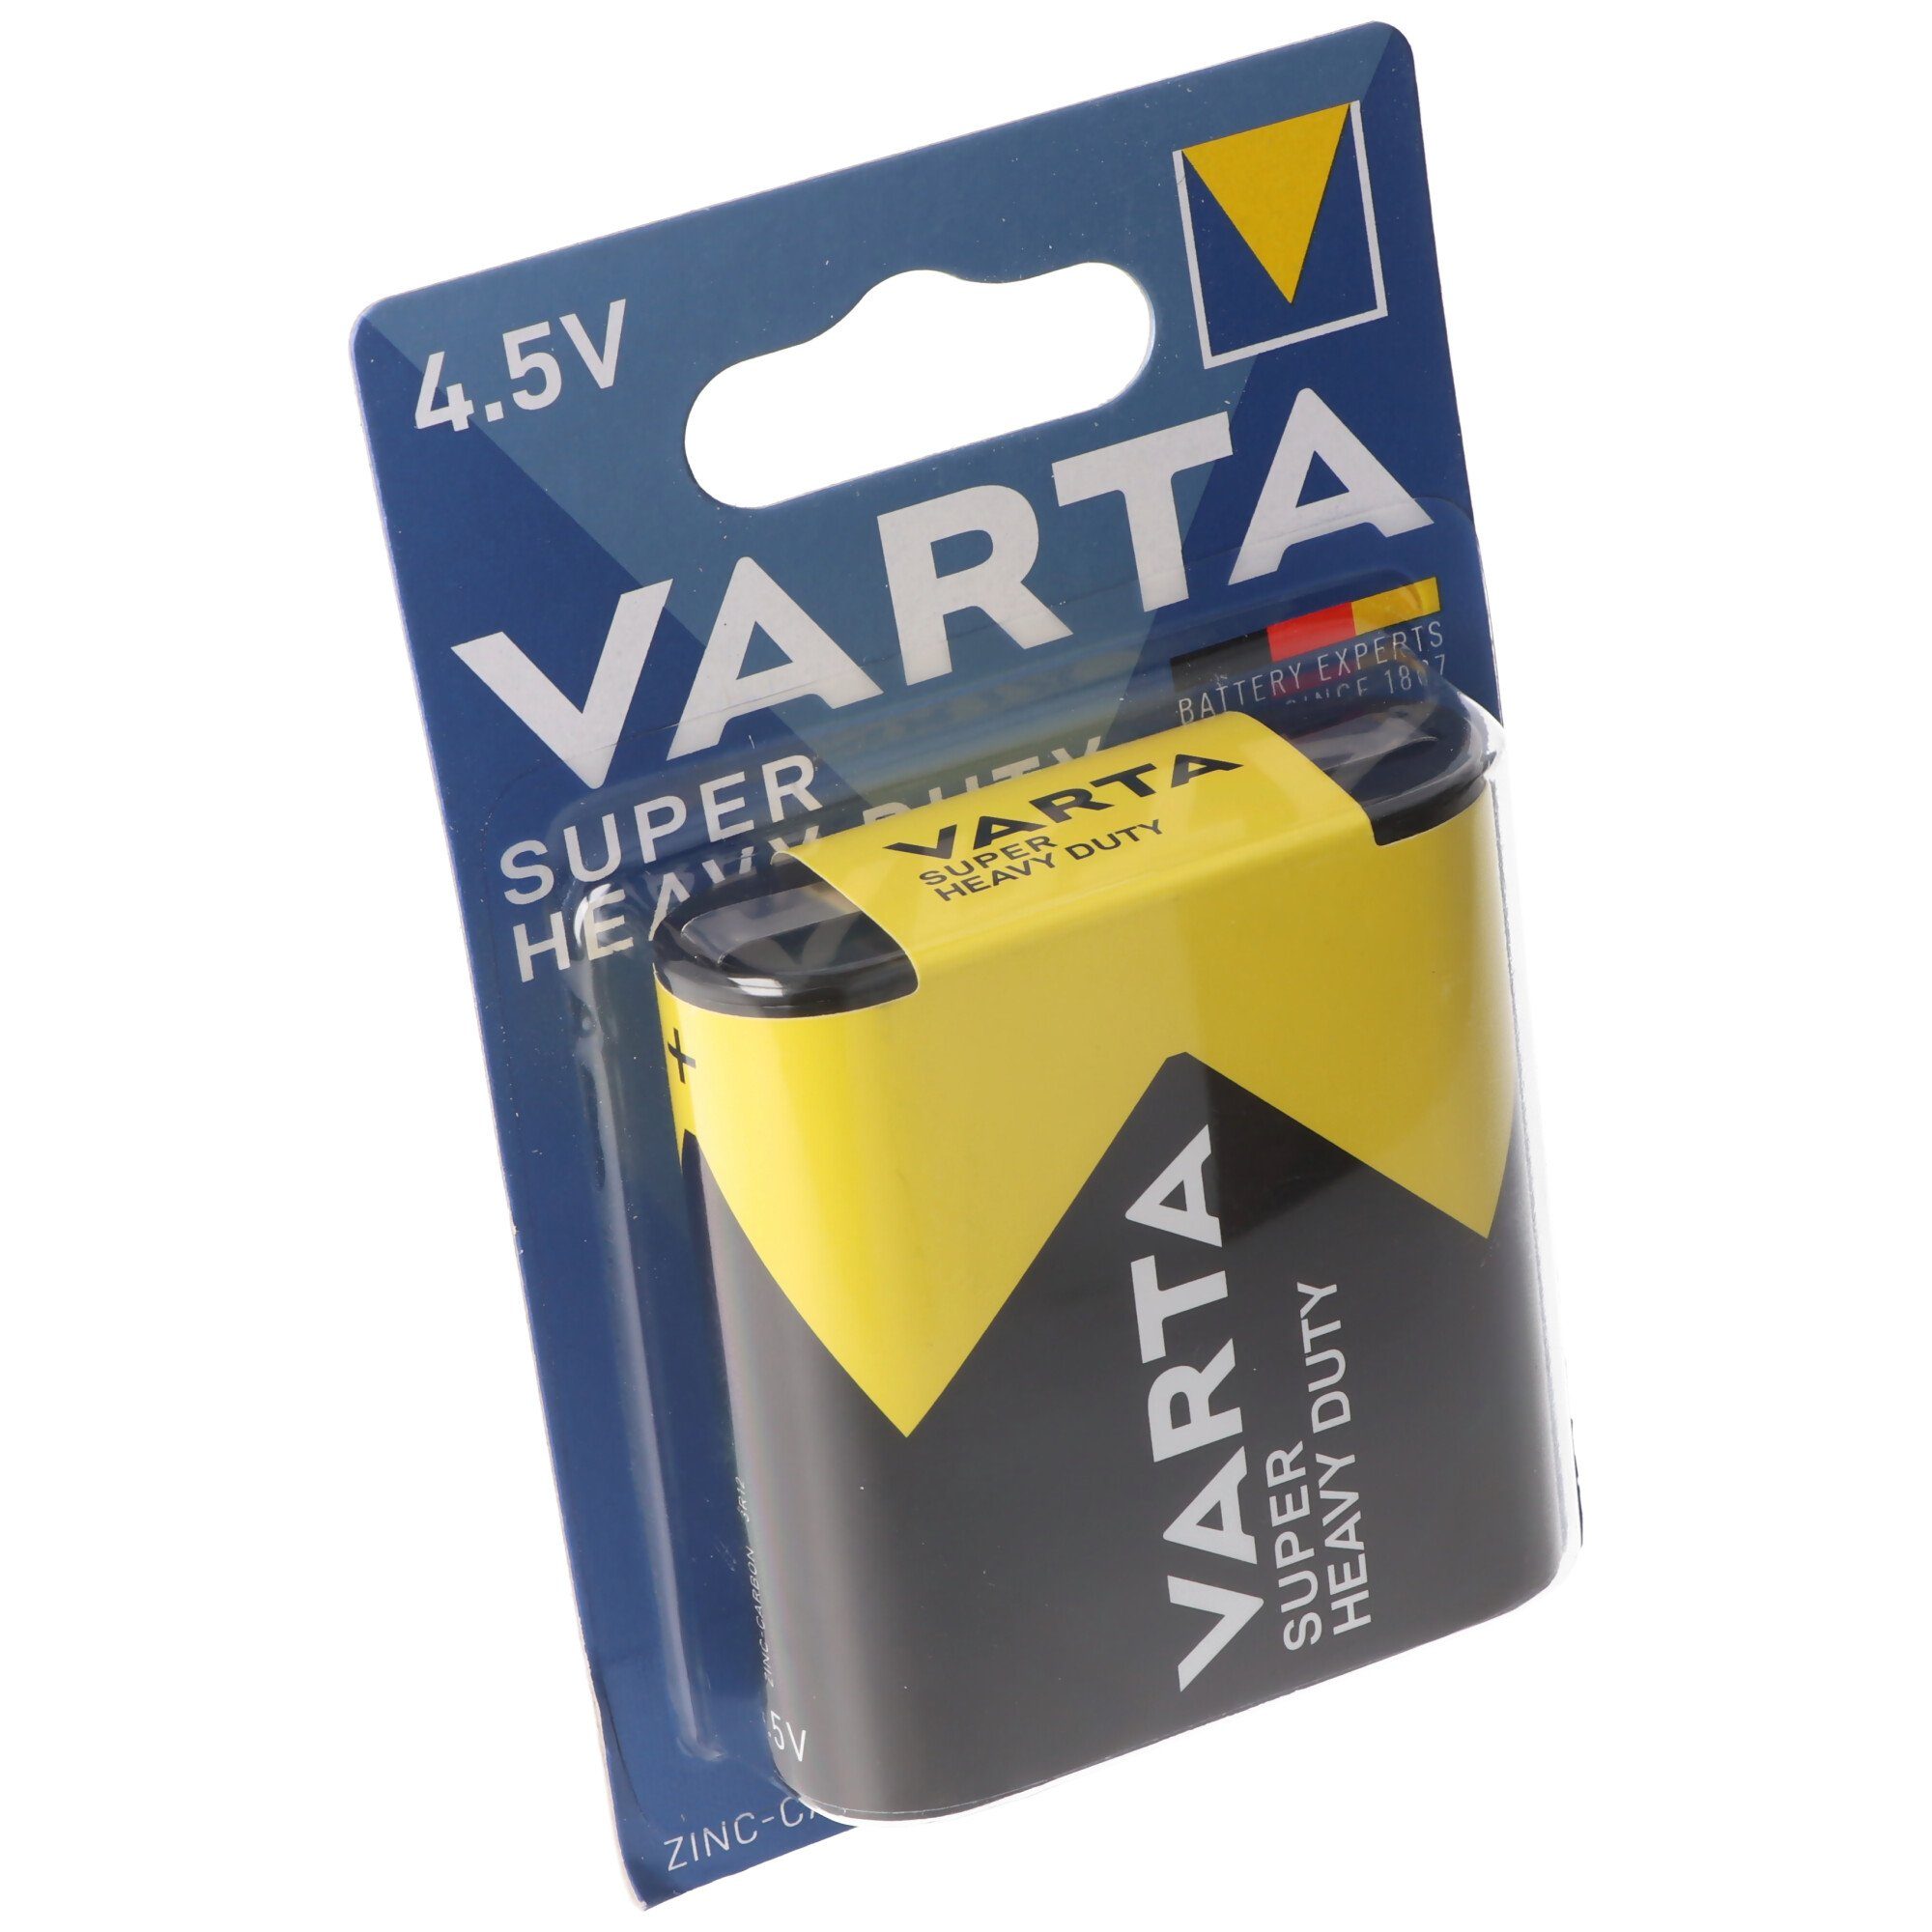 VARTA Varta Superlife 4,5 Volt 3012 Normal 3R12, 3R12P Flachbatterie Batterie, (4,5 V) | Batterien